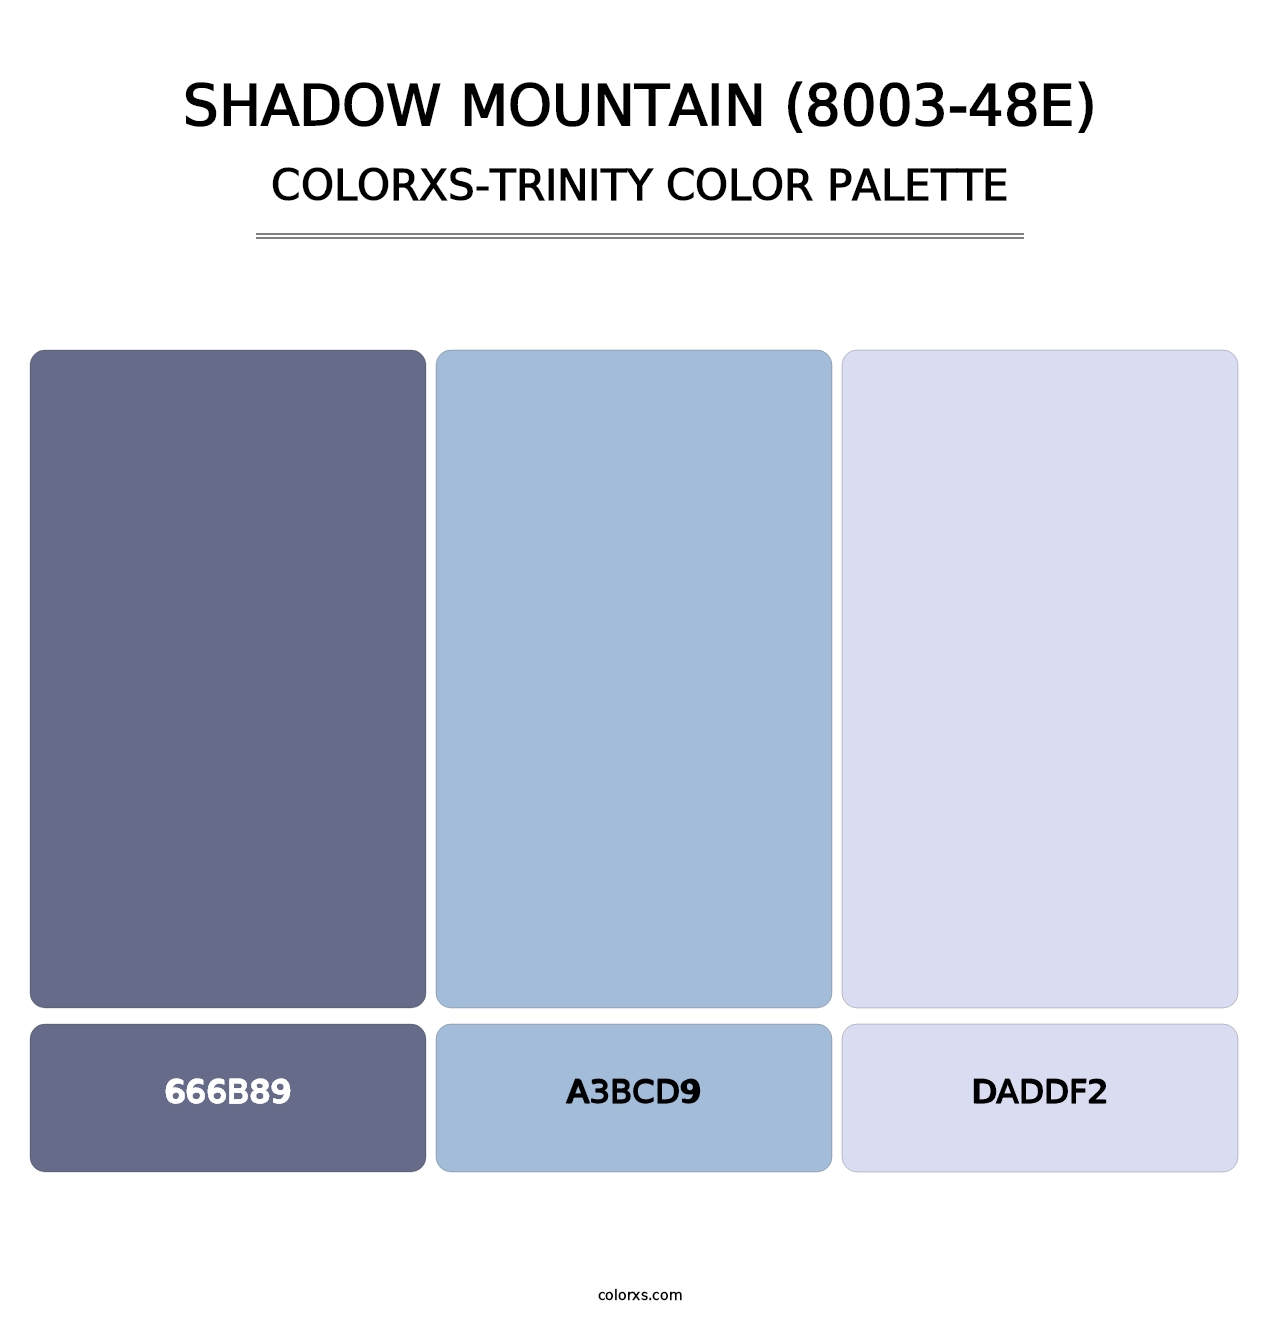 Shadow Mountain (8003-48E) - Colorxs Trinity Palette